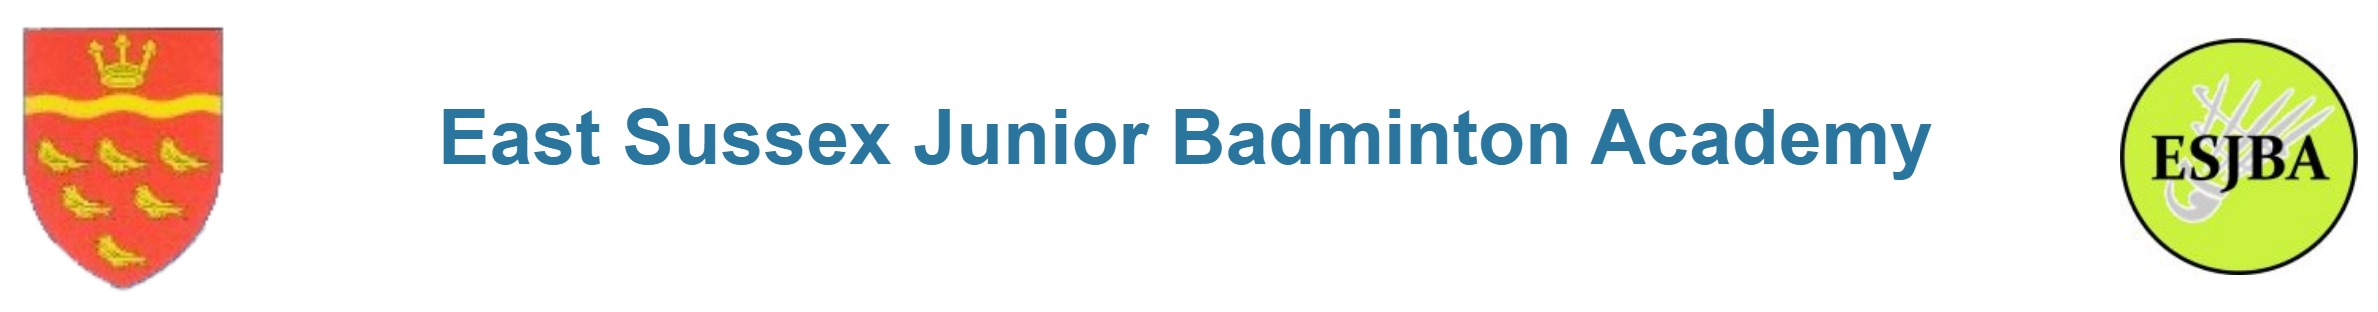 East Sussex Junior Badminton Academy logo